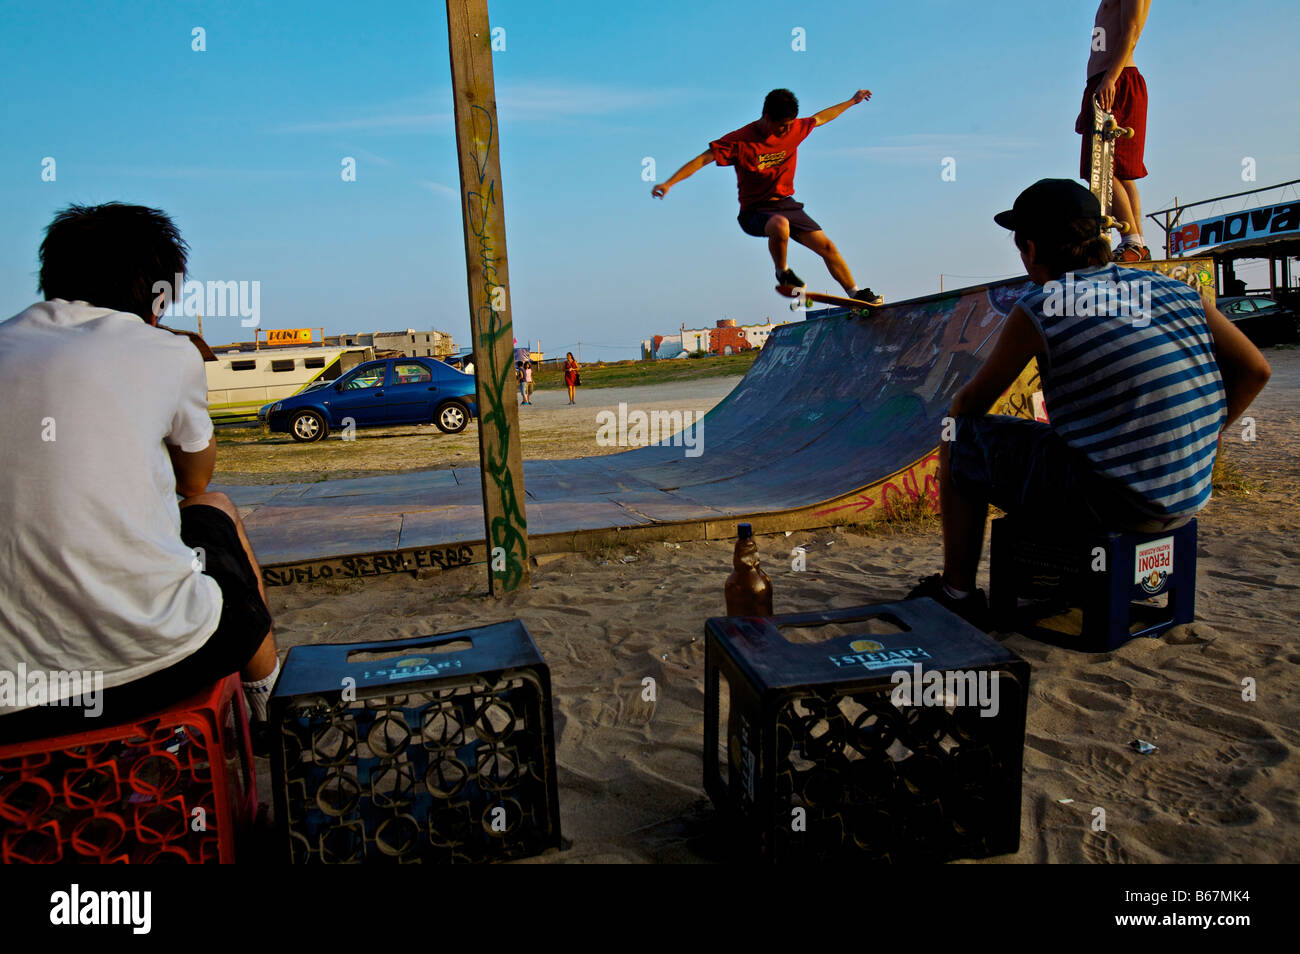 Teens skateboarding on the beach Stock Photo